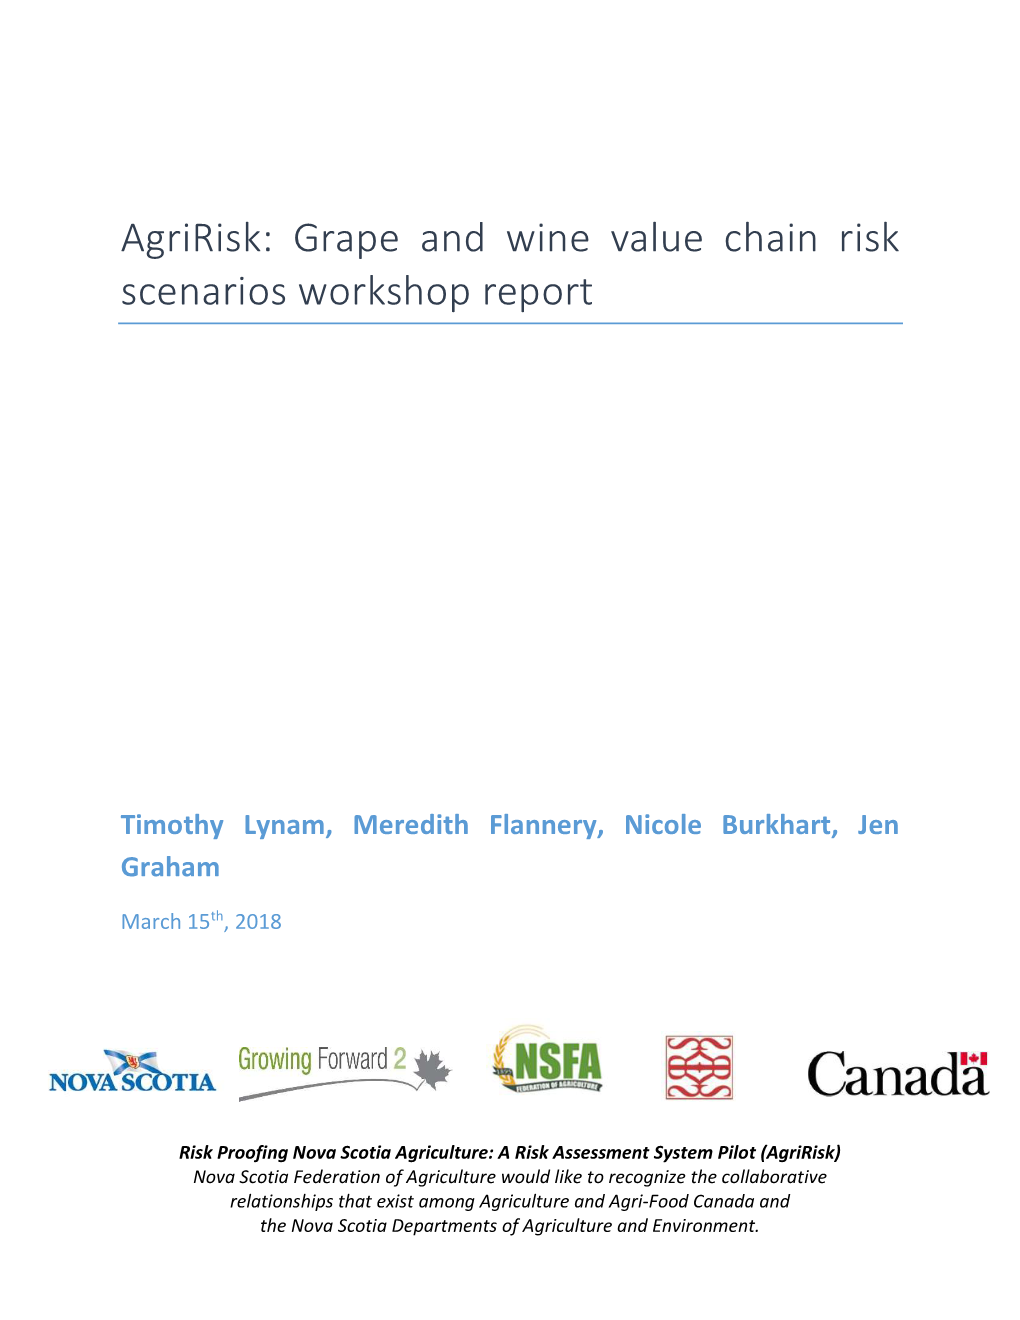 Agririsk: Grape and Wine Value Chain Risk Scenarios Workshop Report